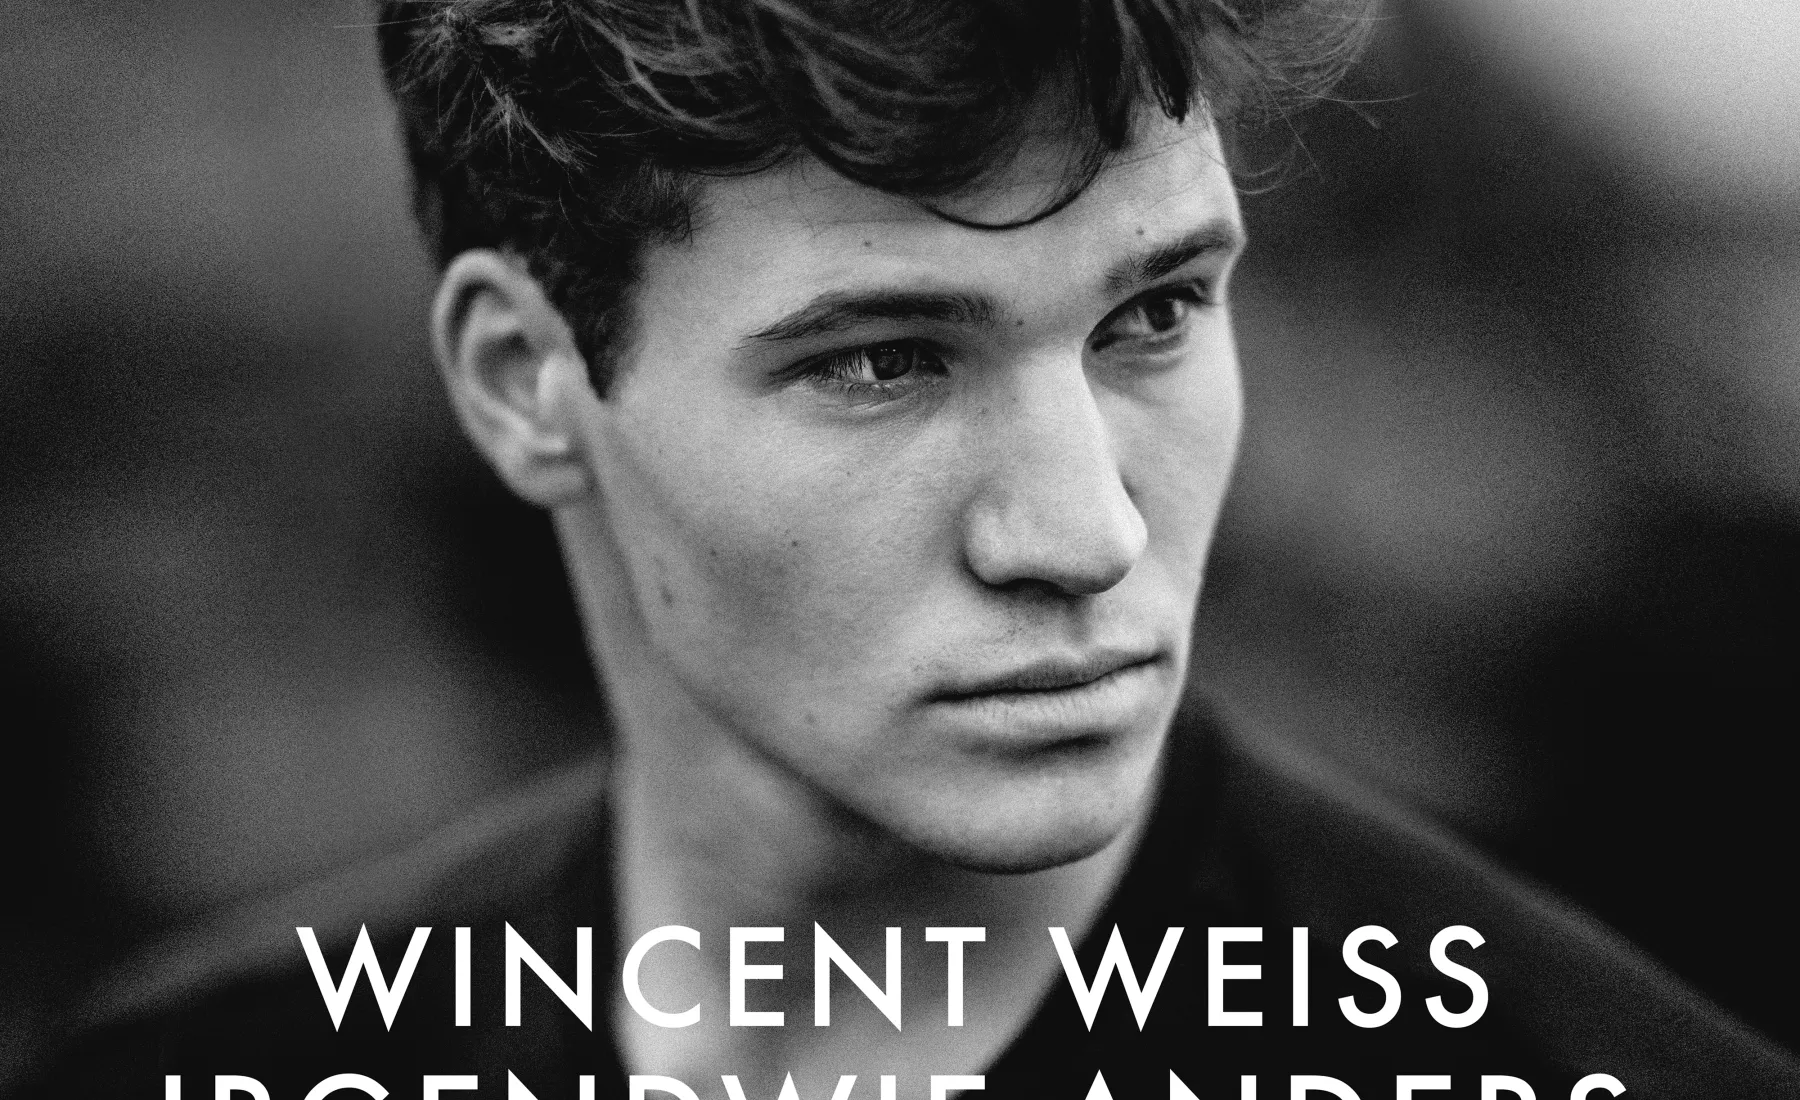 Wincent Weiss - "Irgendwie Anders" 